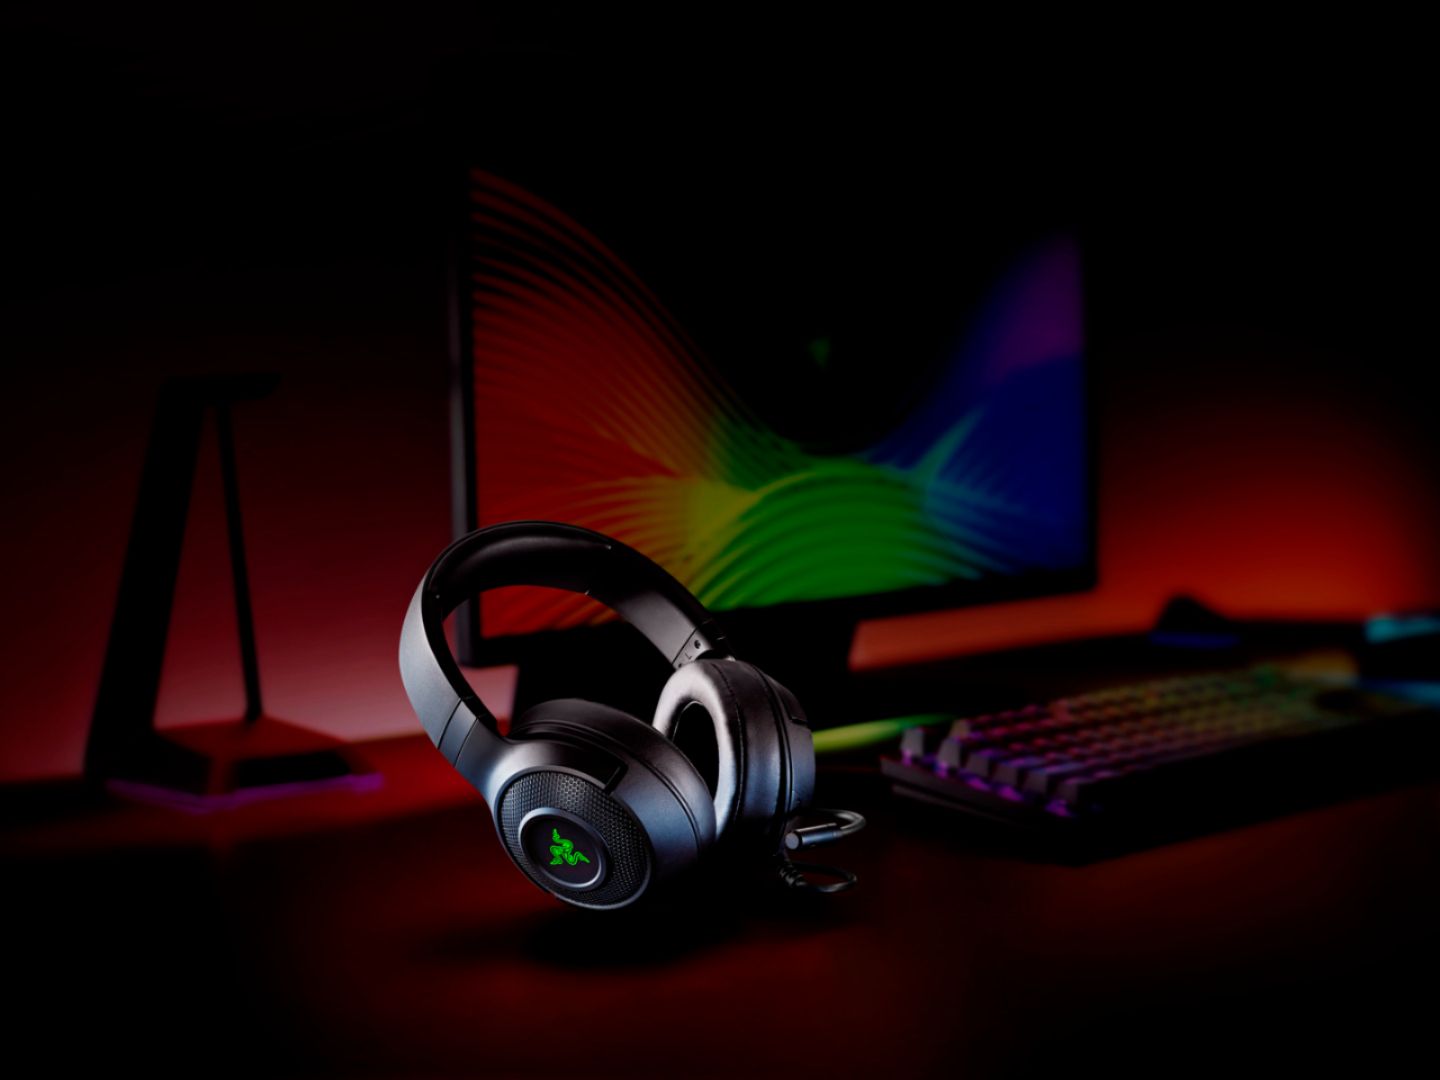  Razer Kraken X USB Ultralight Gaming Headset: 7.1 Surround  Sound - Lightweight Frame - Green Logo Lighting - Integrated Audio Controls  - Bendable Cardioid Microphone - for PC - Classic Black : Video Games